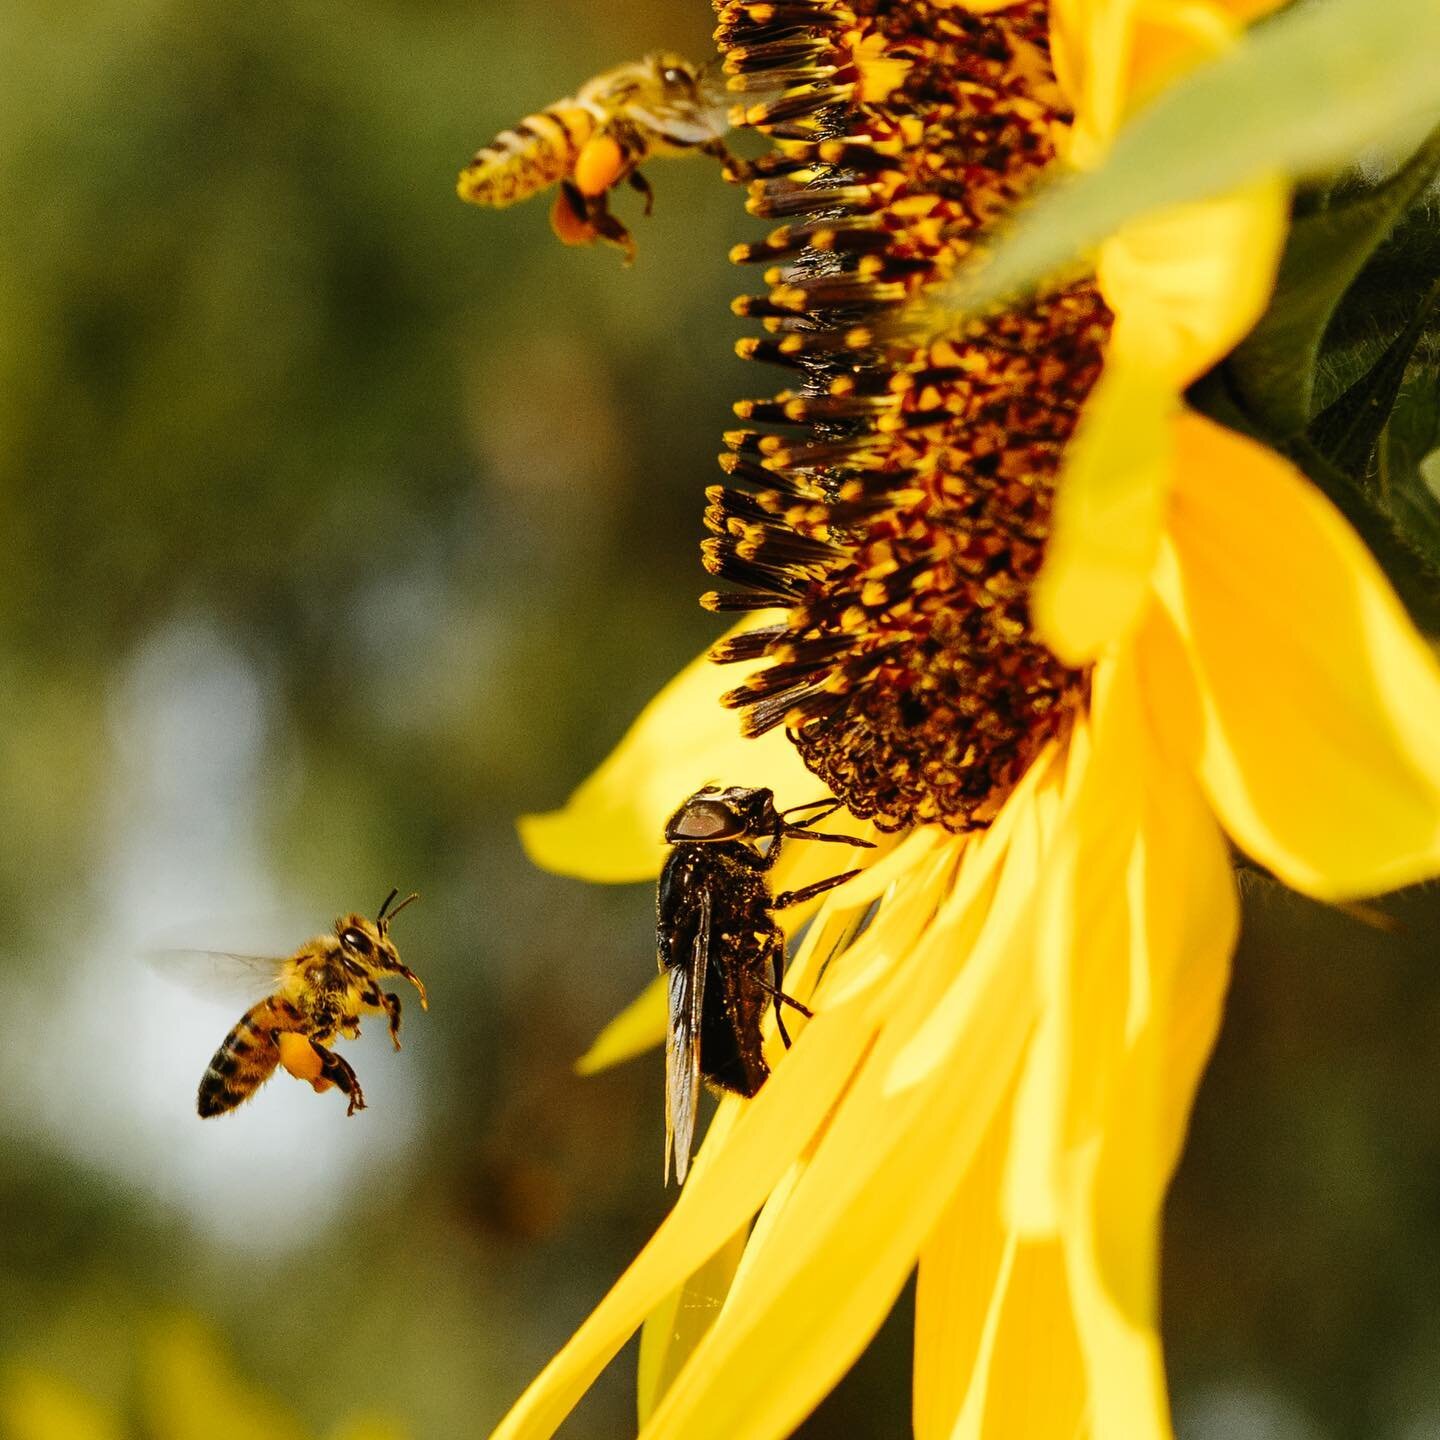 Simbiosis!!! 🐝 Bees are a crucial part of the team at Catalina View Farms. 

Photos: @patrickrecord
#heirloomtomatoes
#organictomatoes
#italianheirloomzucchini
#shishitopeppers
#organic
#farmtotable
#lifeonthefarm
#meyerlemons
#mandarinoranges
#avoc